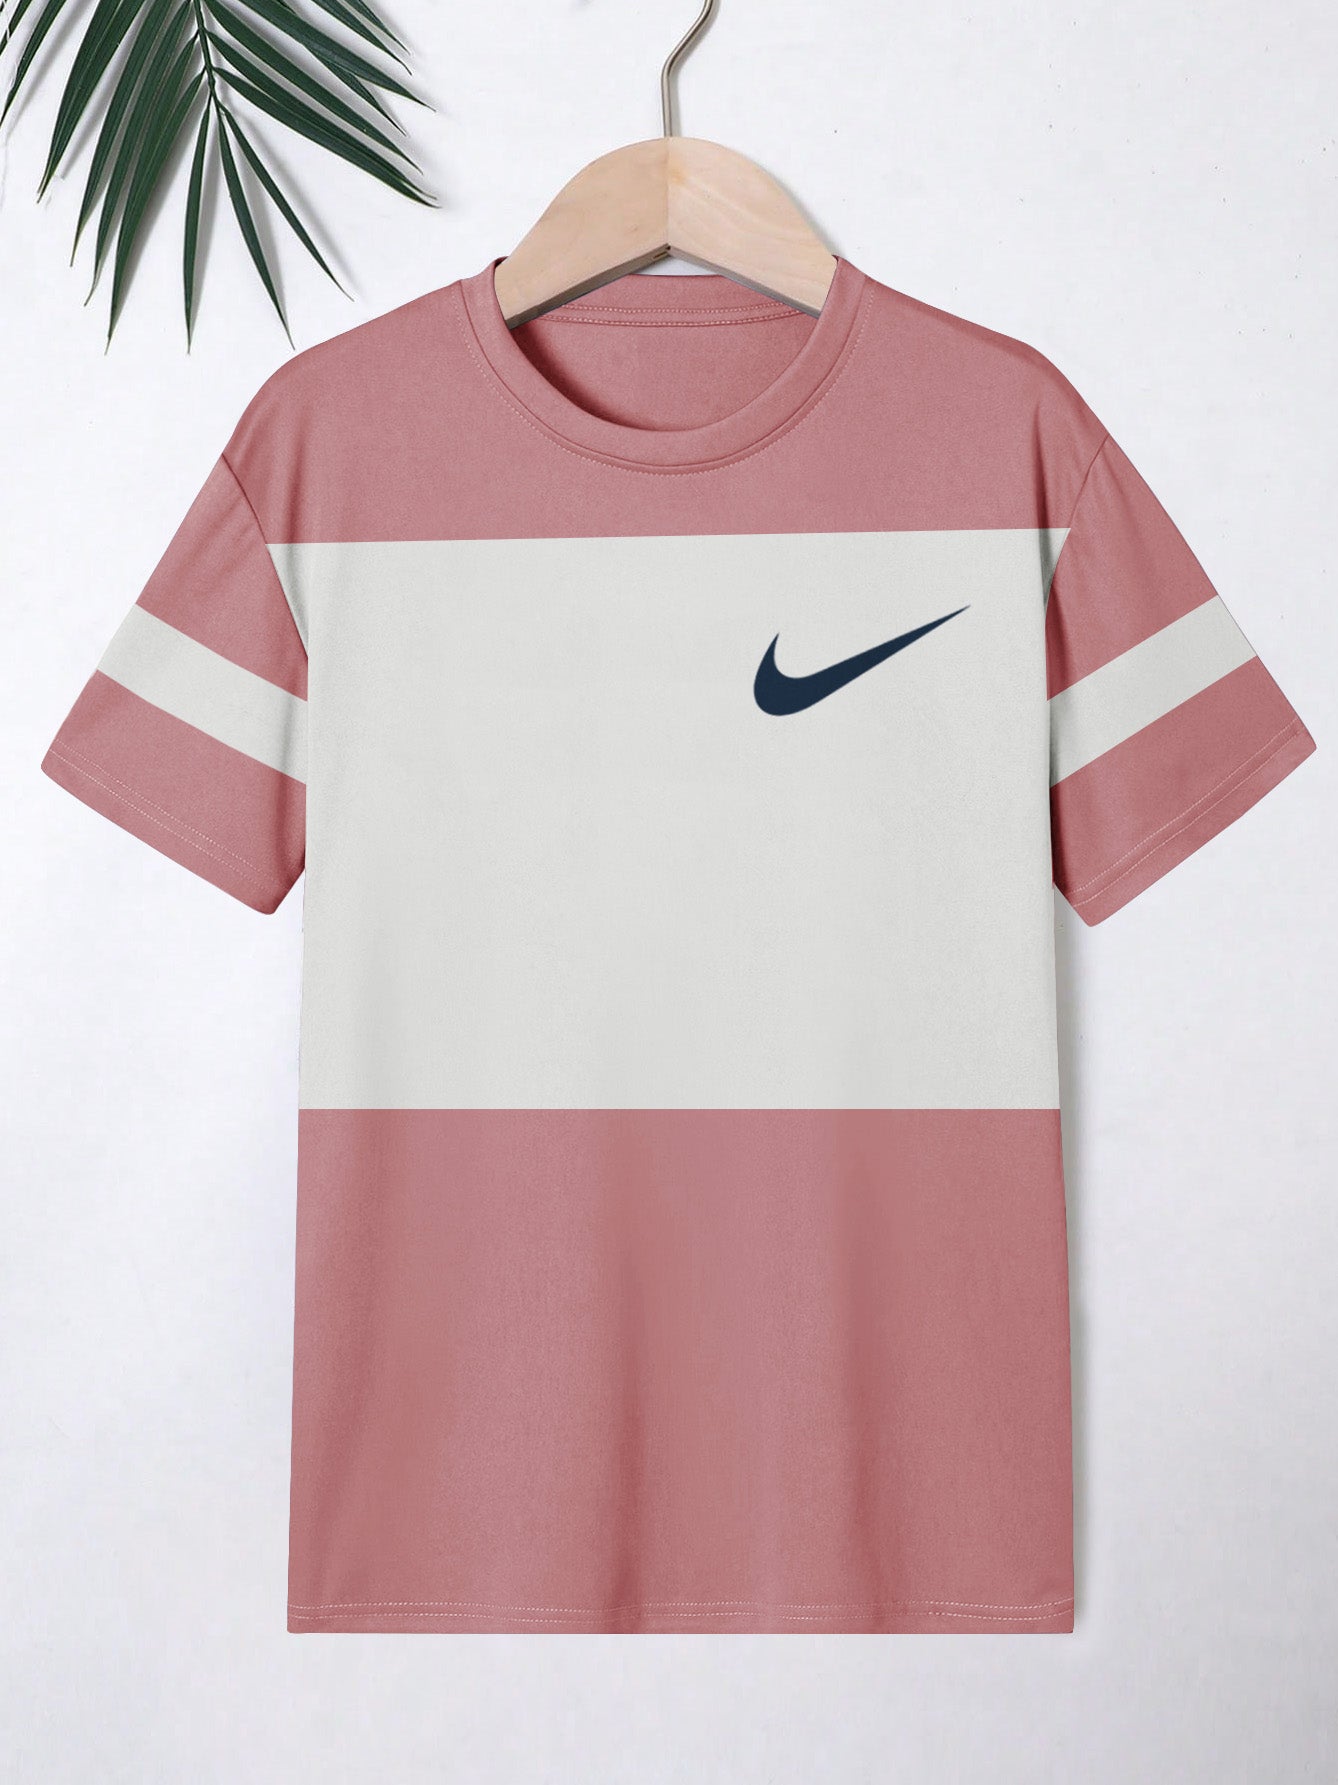 NK Crew Neck Single Jersey Tee Shirt For Kids-Dark Pink with Smoke White Panels-SP2219